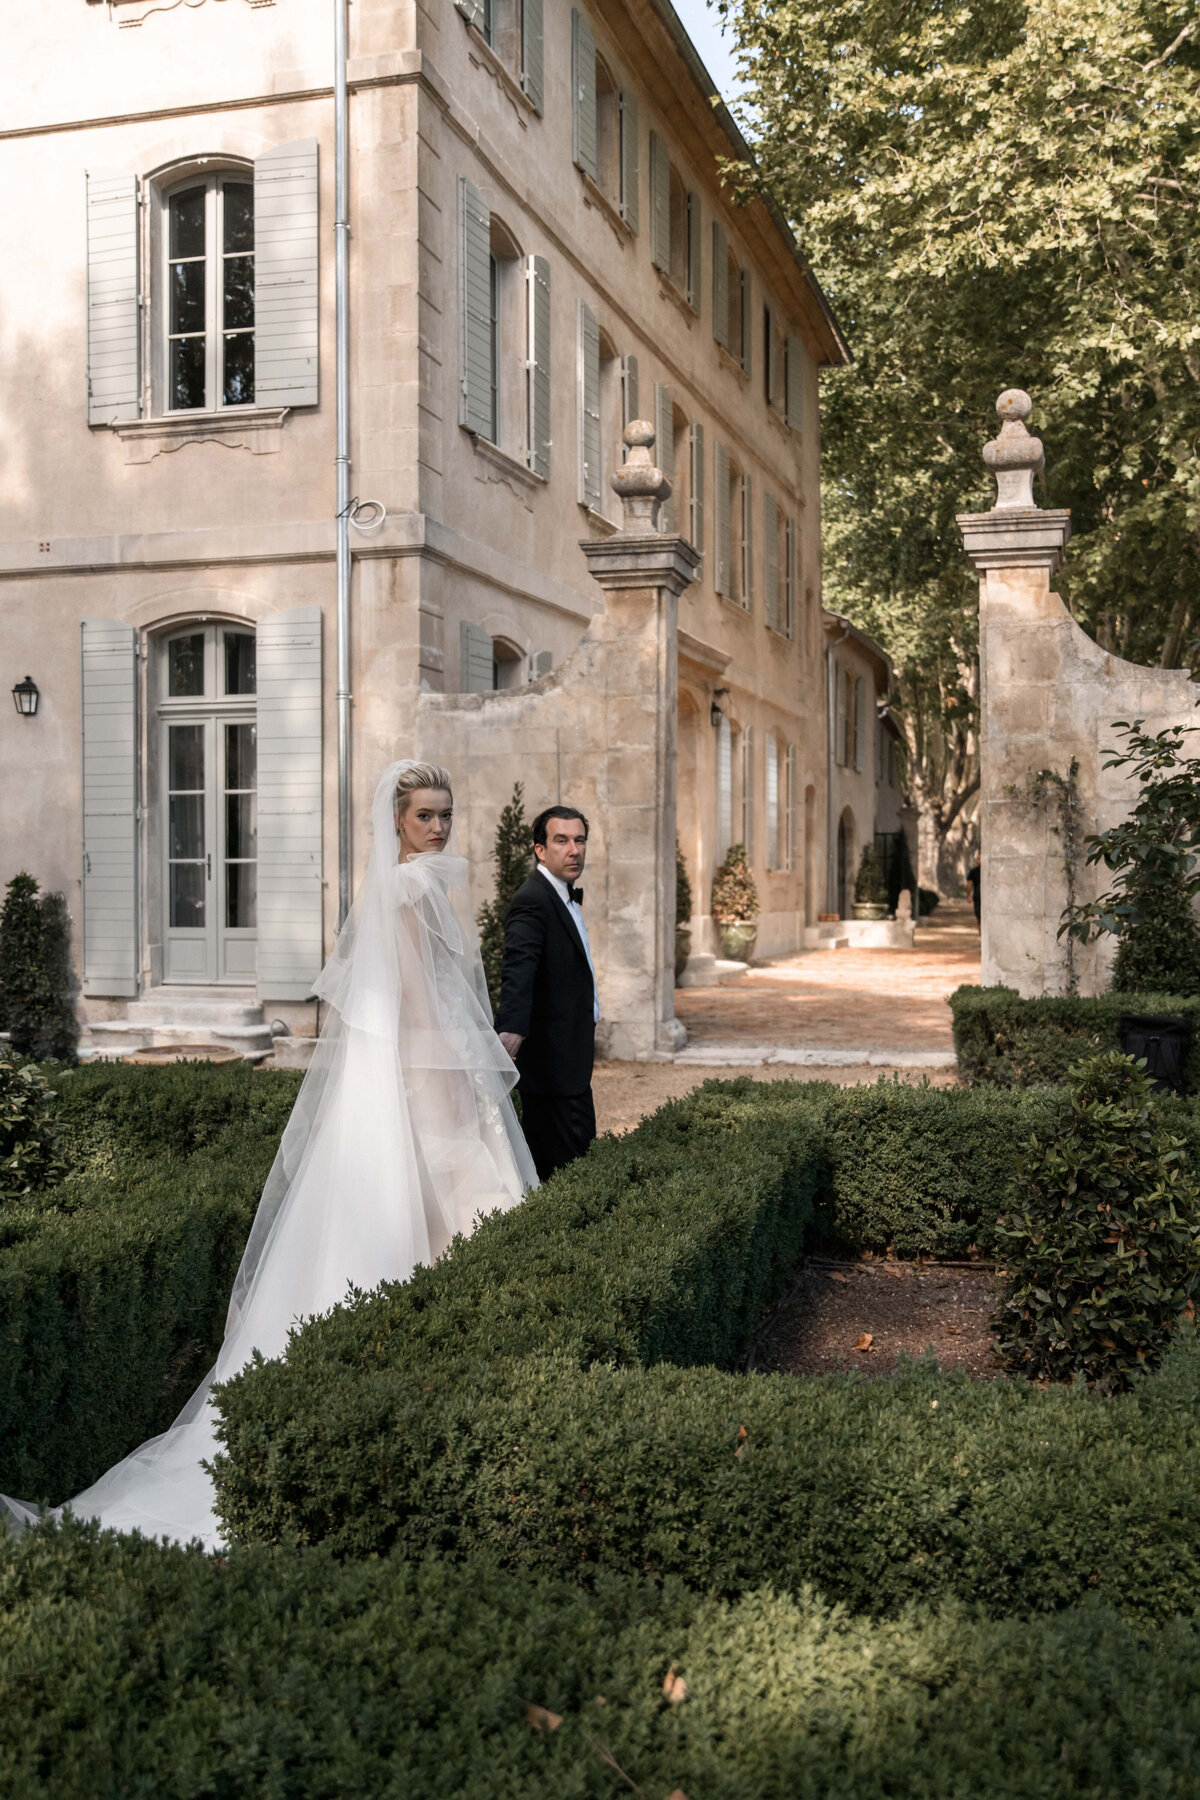 FloraAndGrace_Provence_Editorial_Wedding_Photographer-13 Kopie